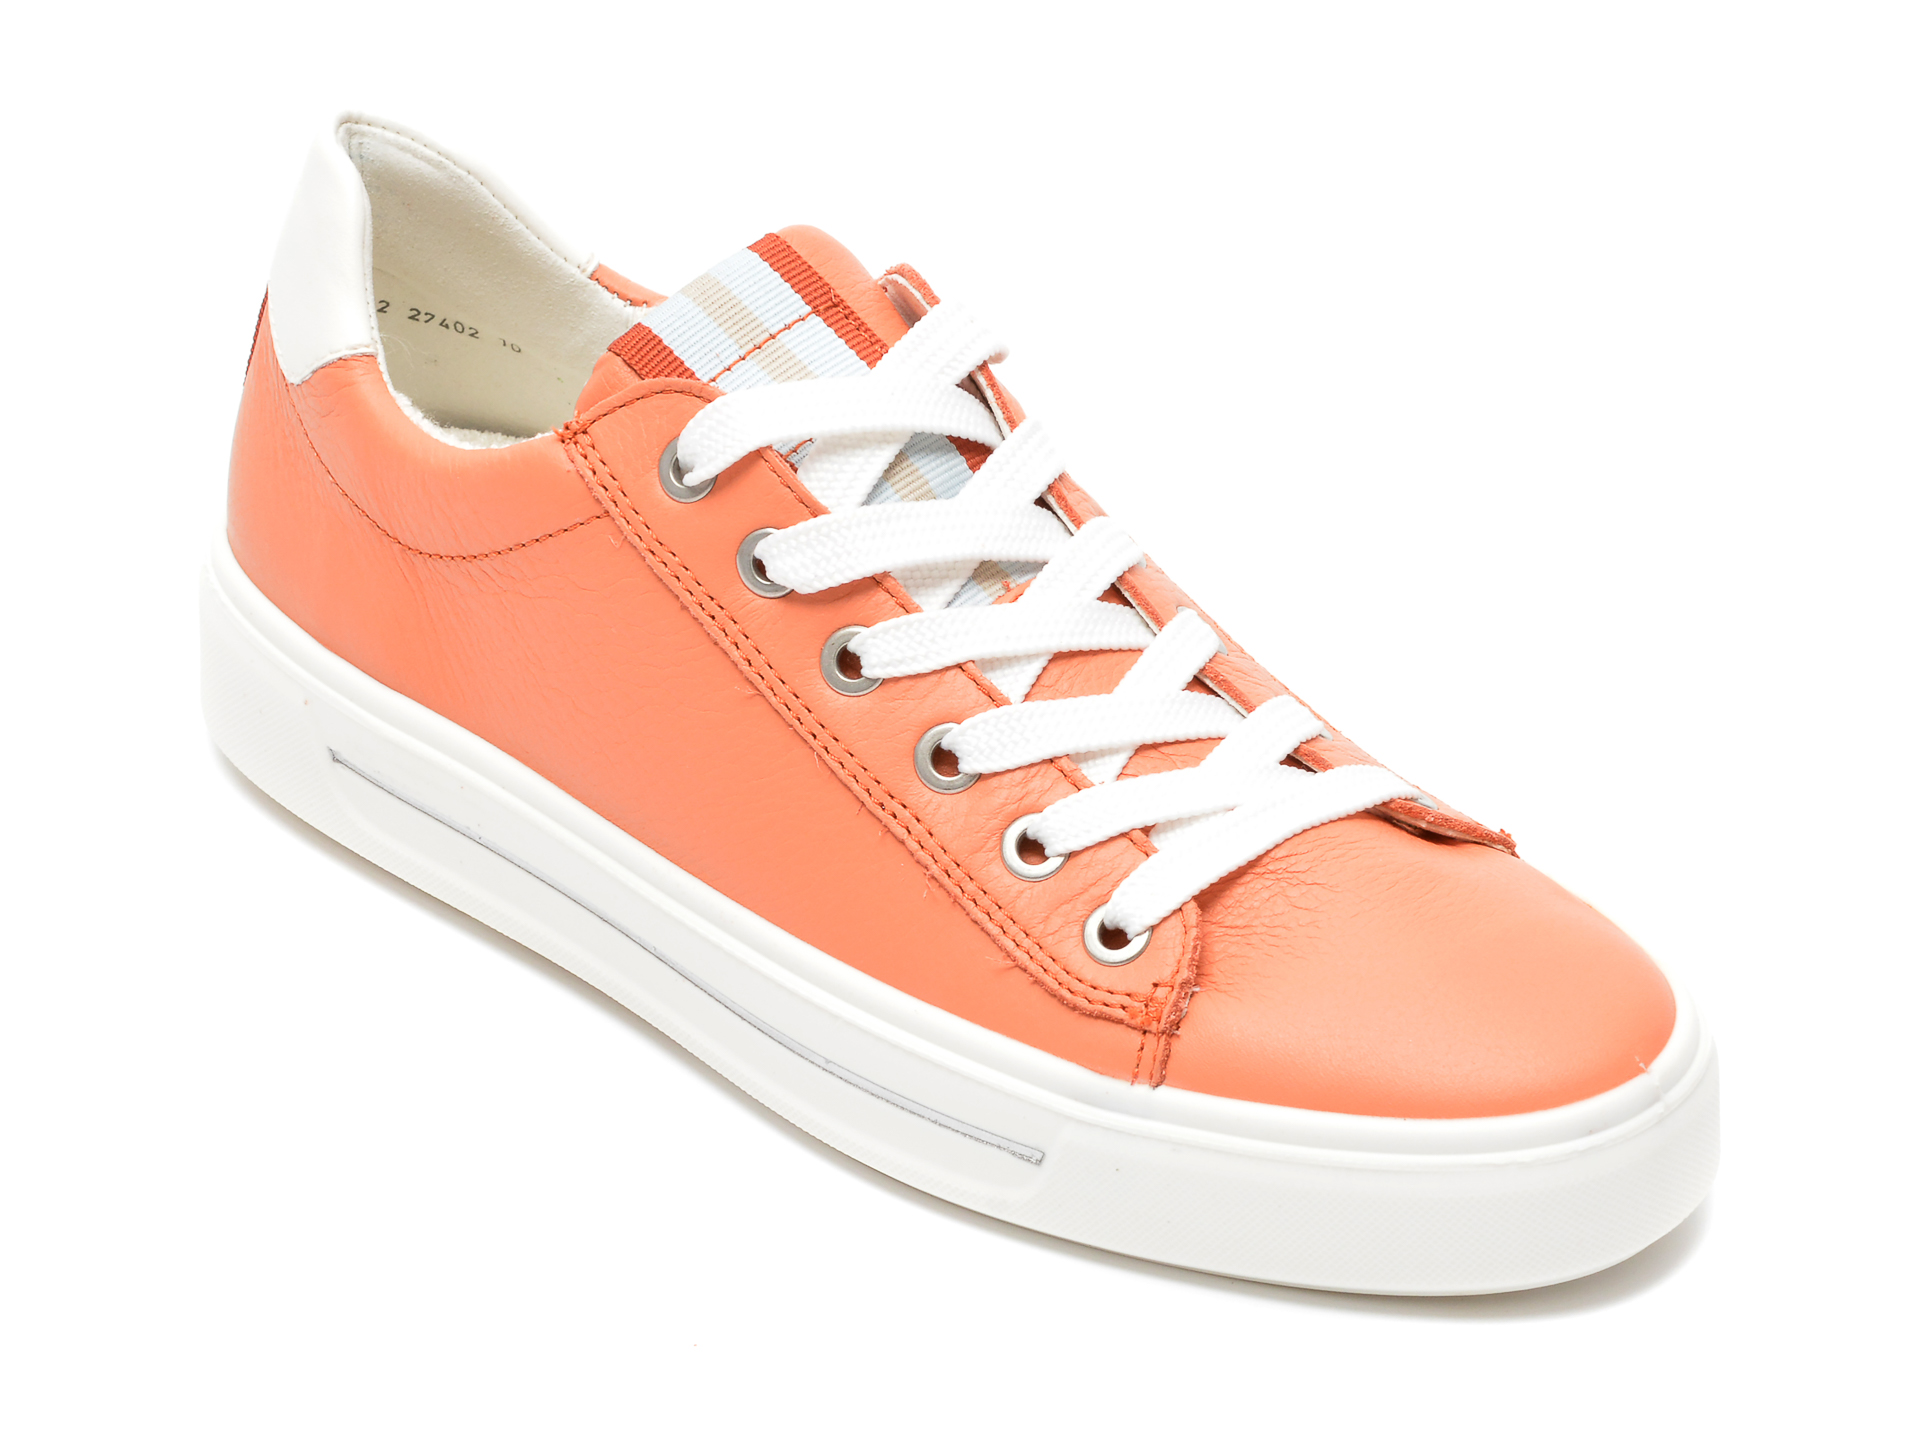 Pantofi sport ARA portocalii, 27402, din piele naturala ARA